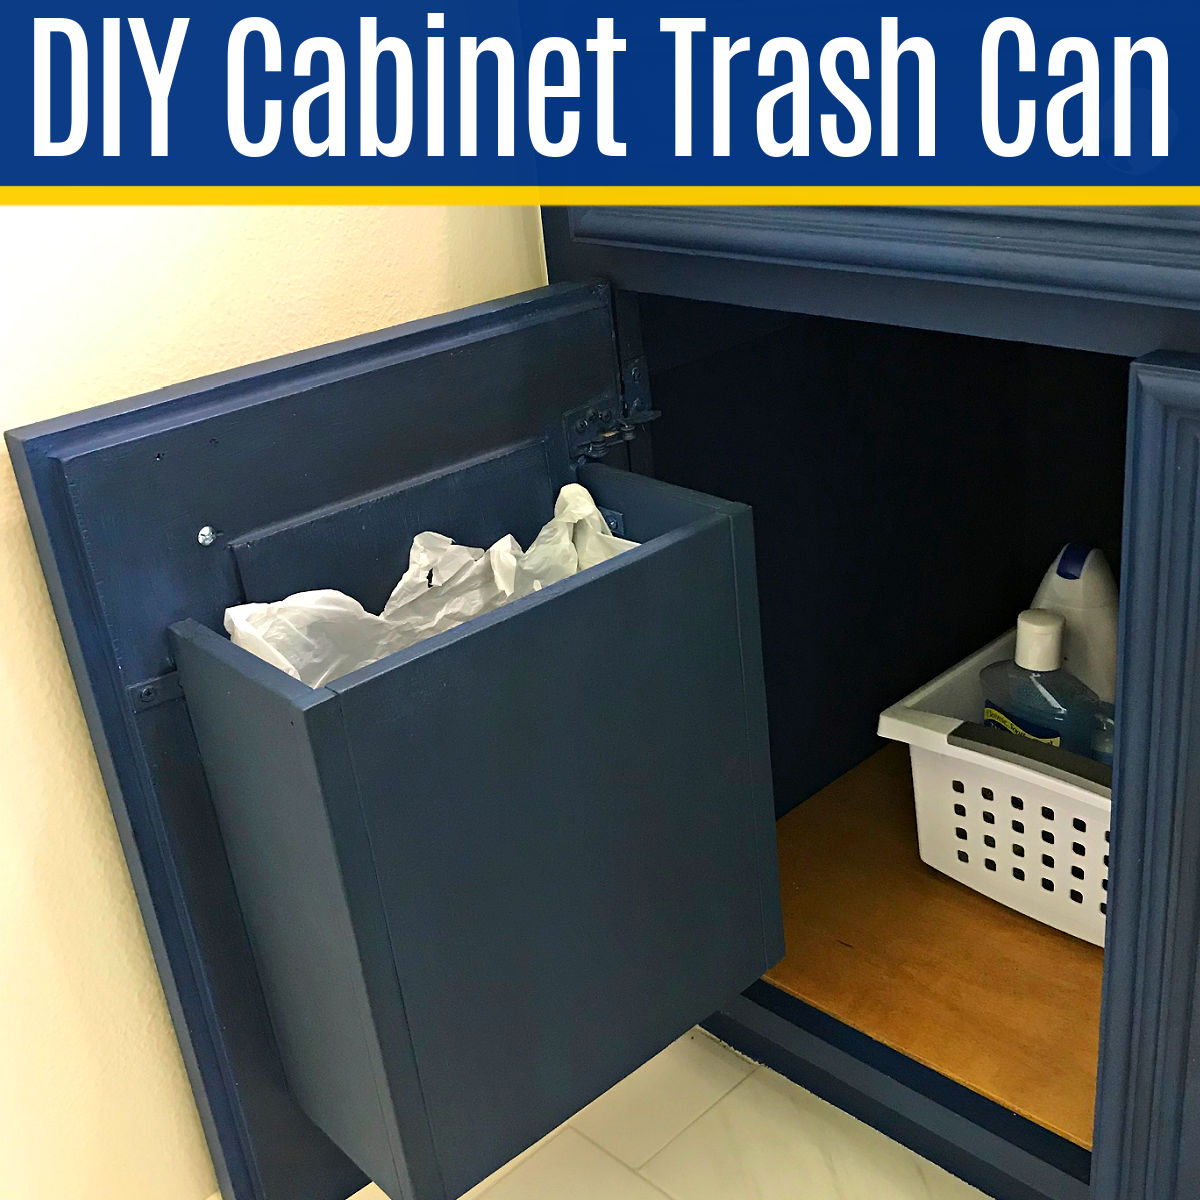 https://www.abbottsathome.com/wp-content/uploads/2019/02/DIY-Cabinet-Door-Trash-Can-Garbage-1.jpg